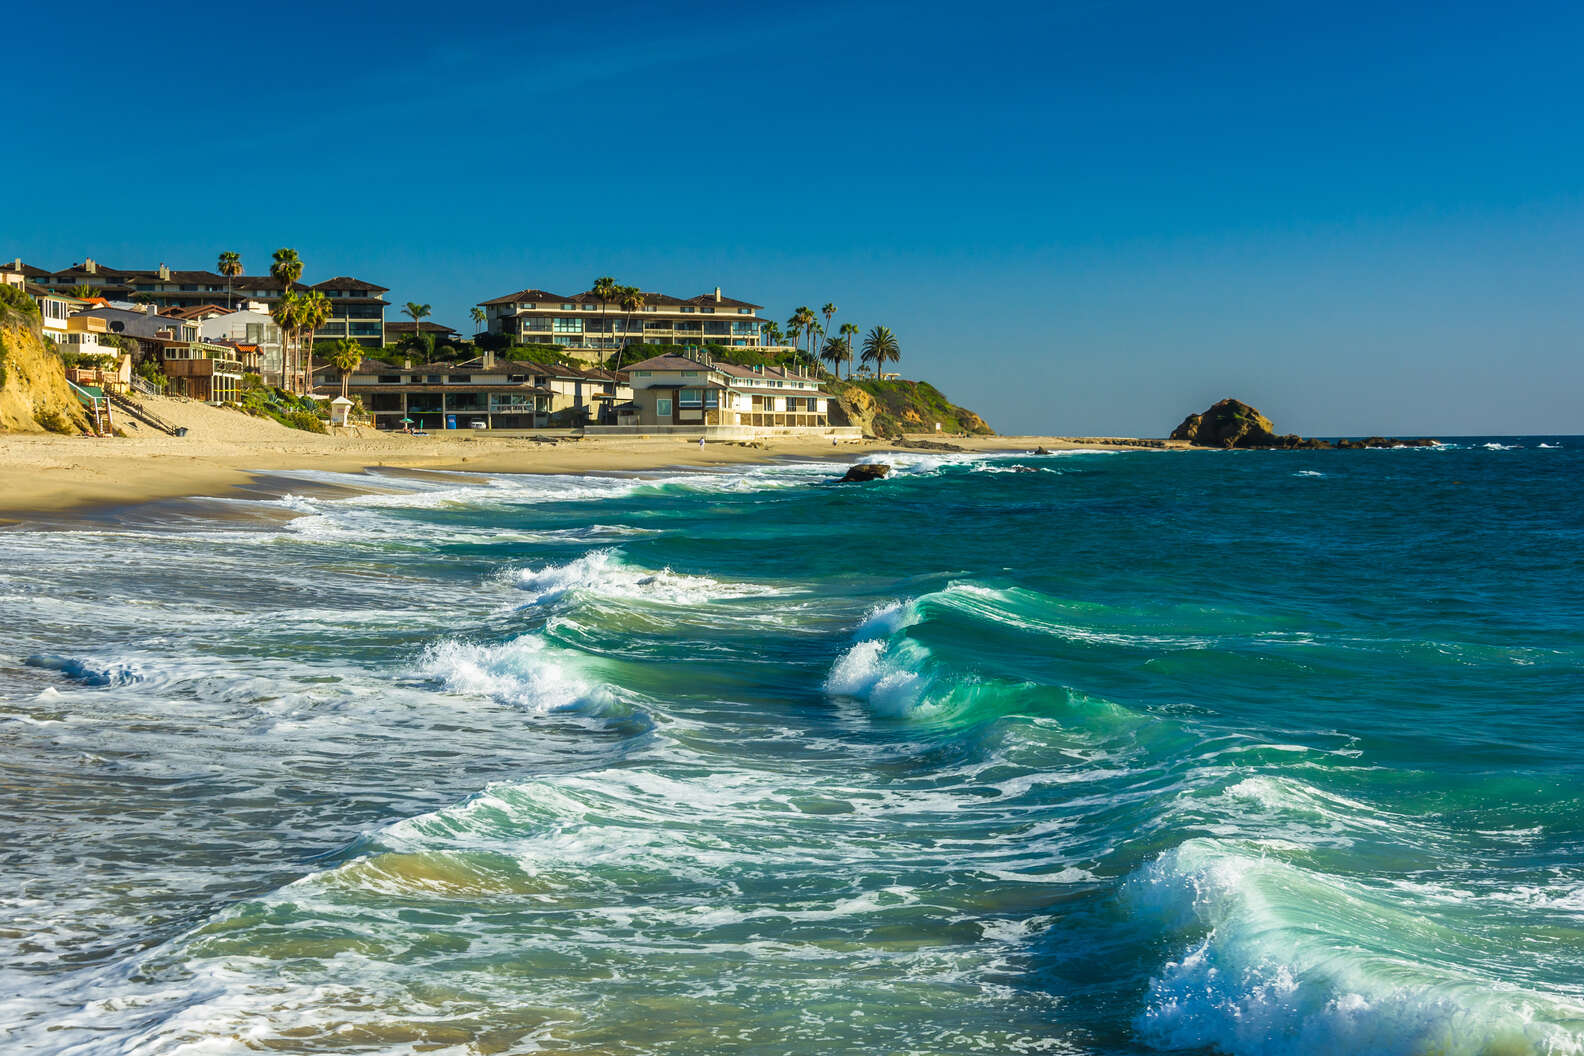 Best Beaches in Southern California Good Beaches Near LA & San Diego